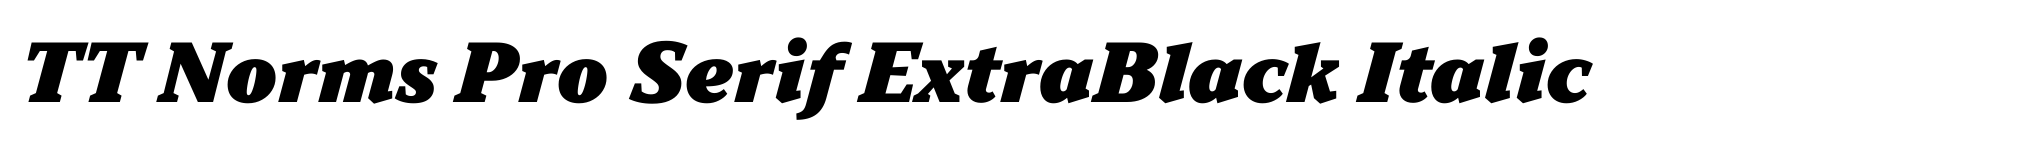 TT Norms Pro Serif ExtraBlack Italic image